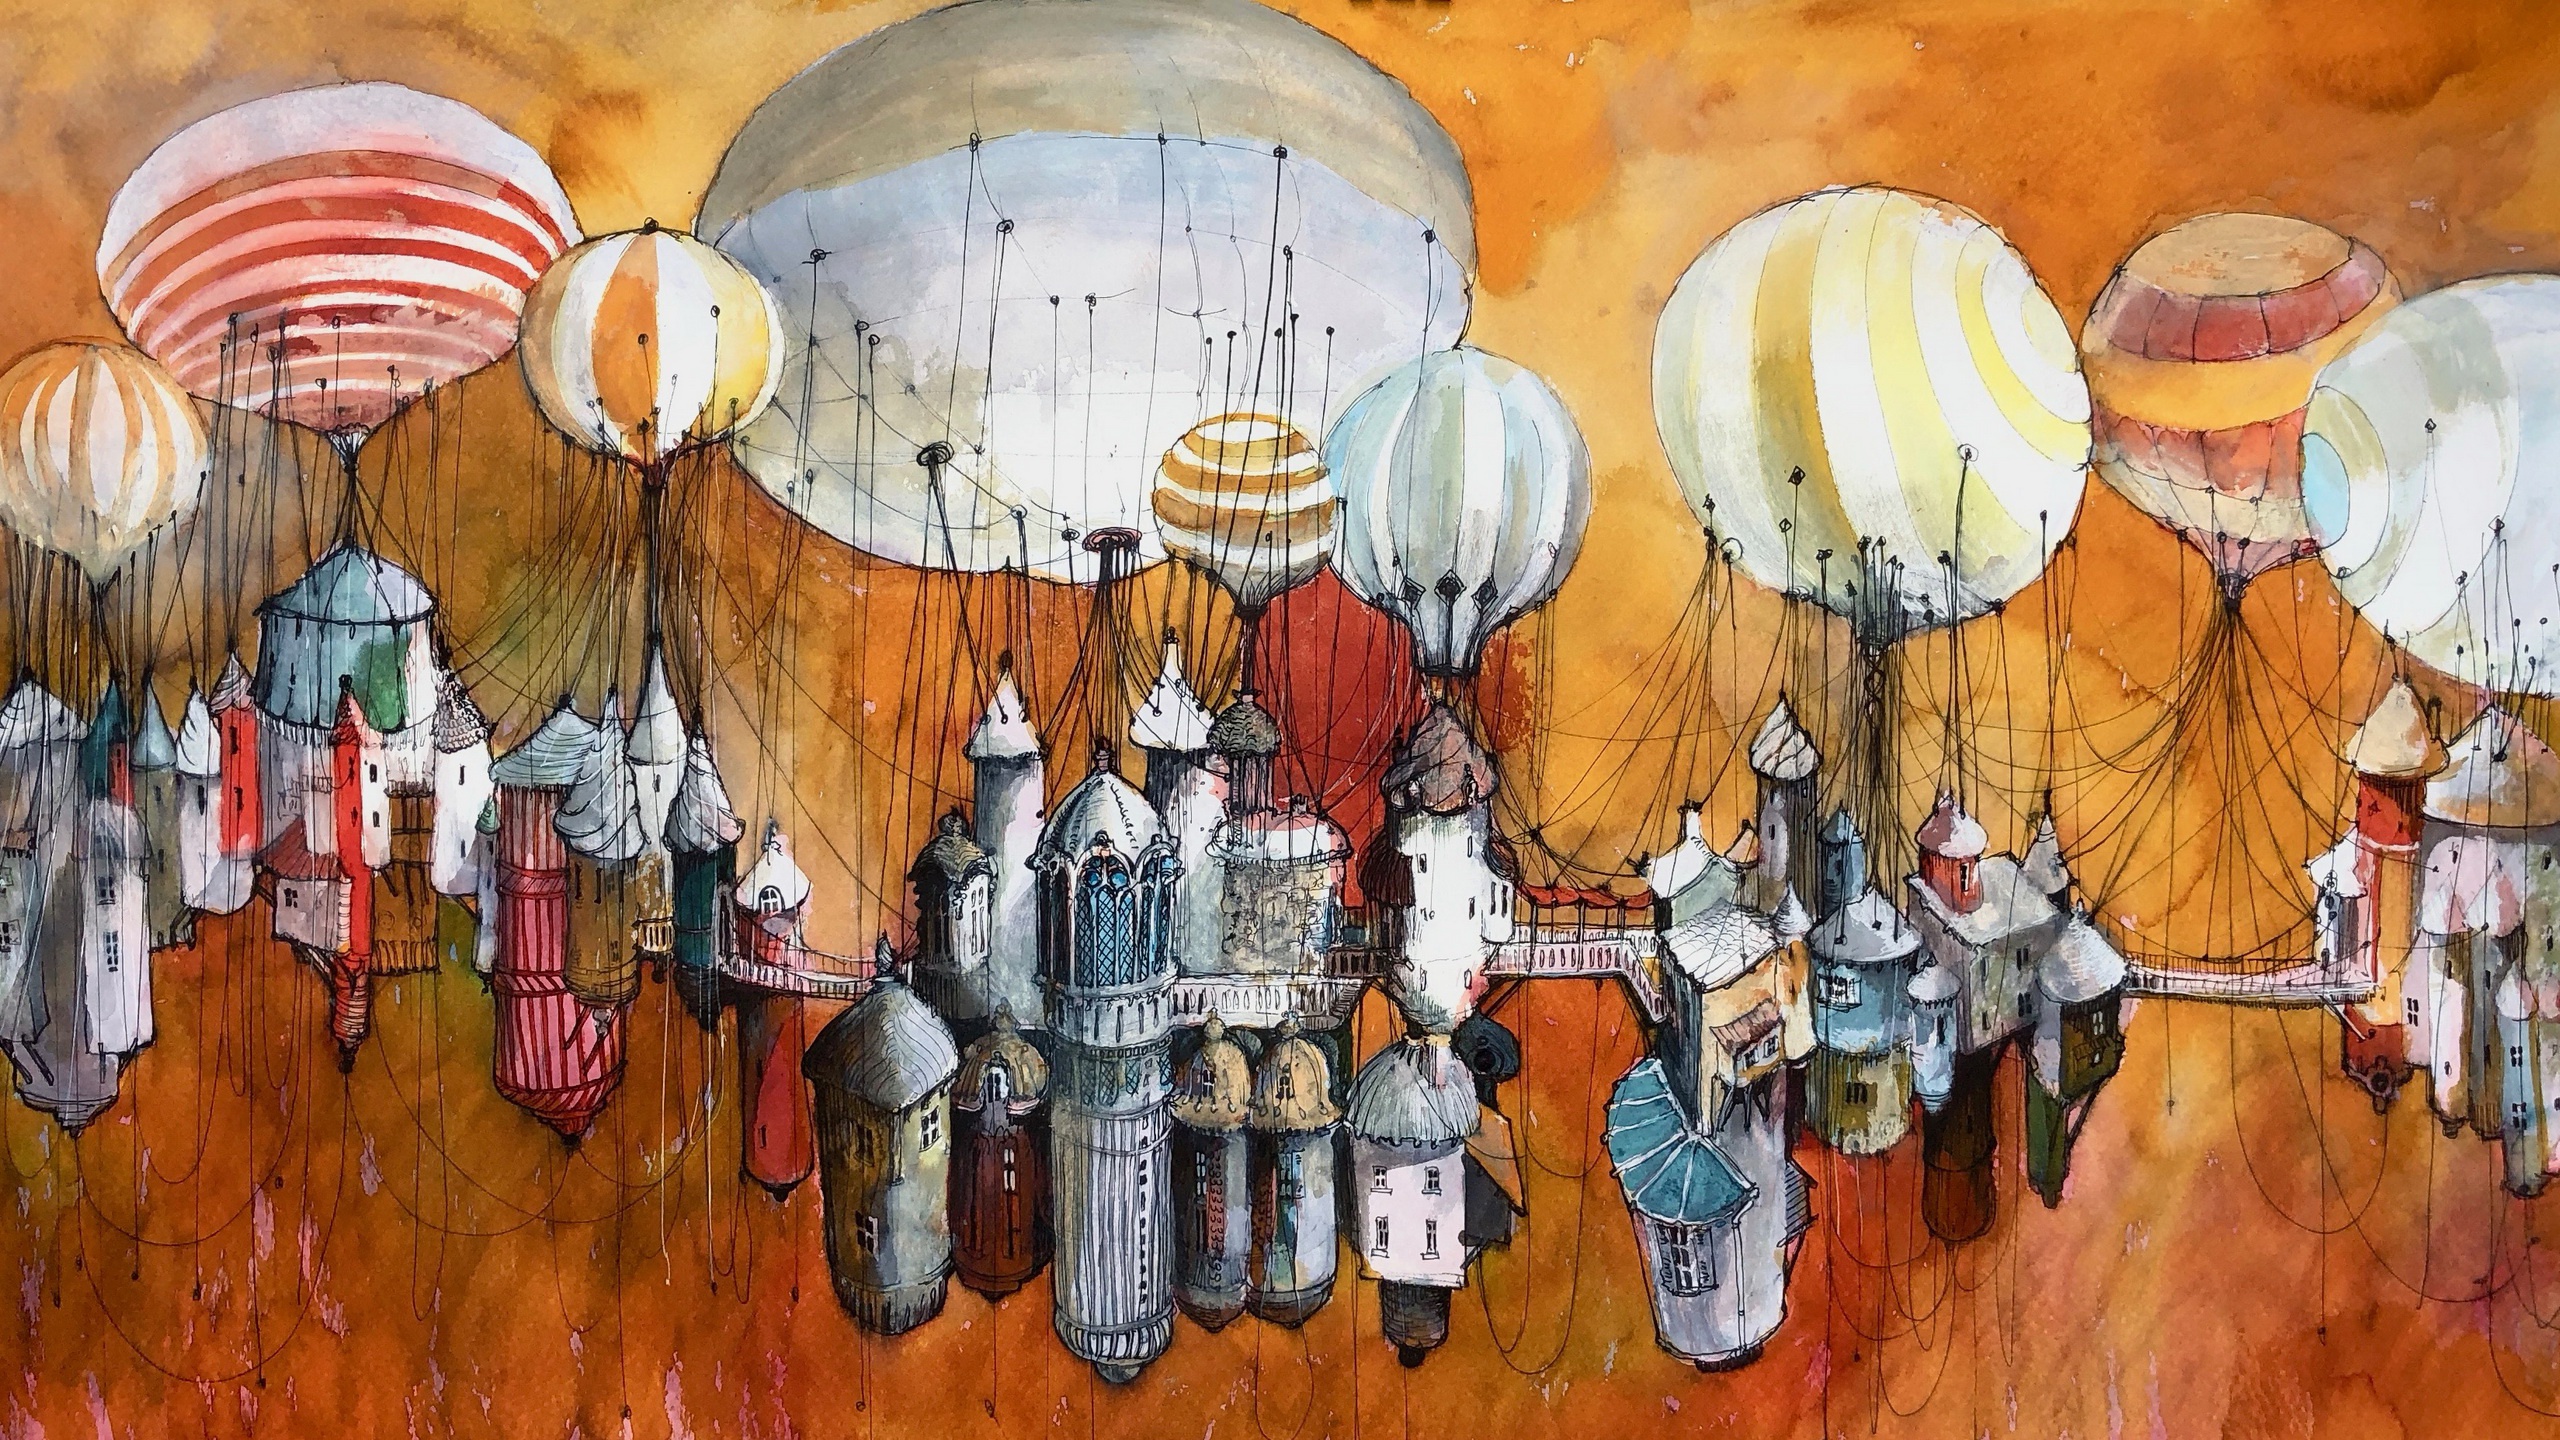 General 2560x1440 artwork fantasy art city hot air balloons